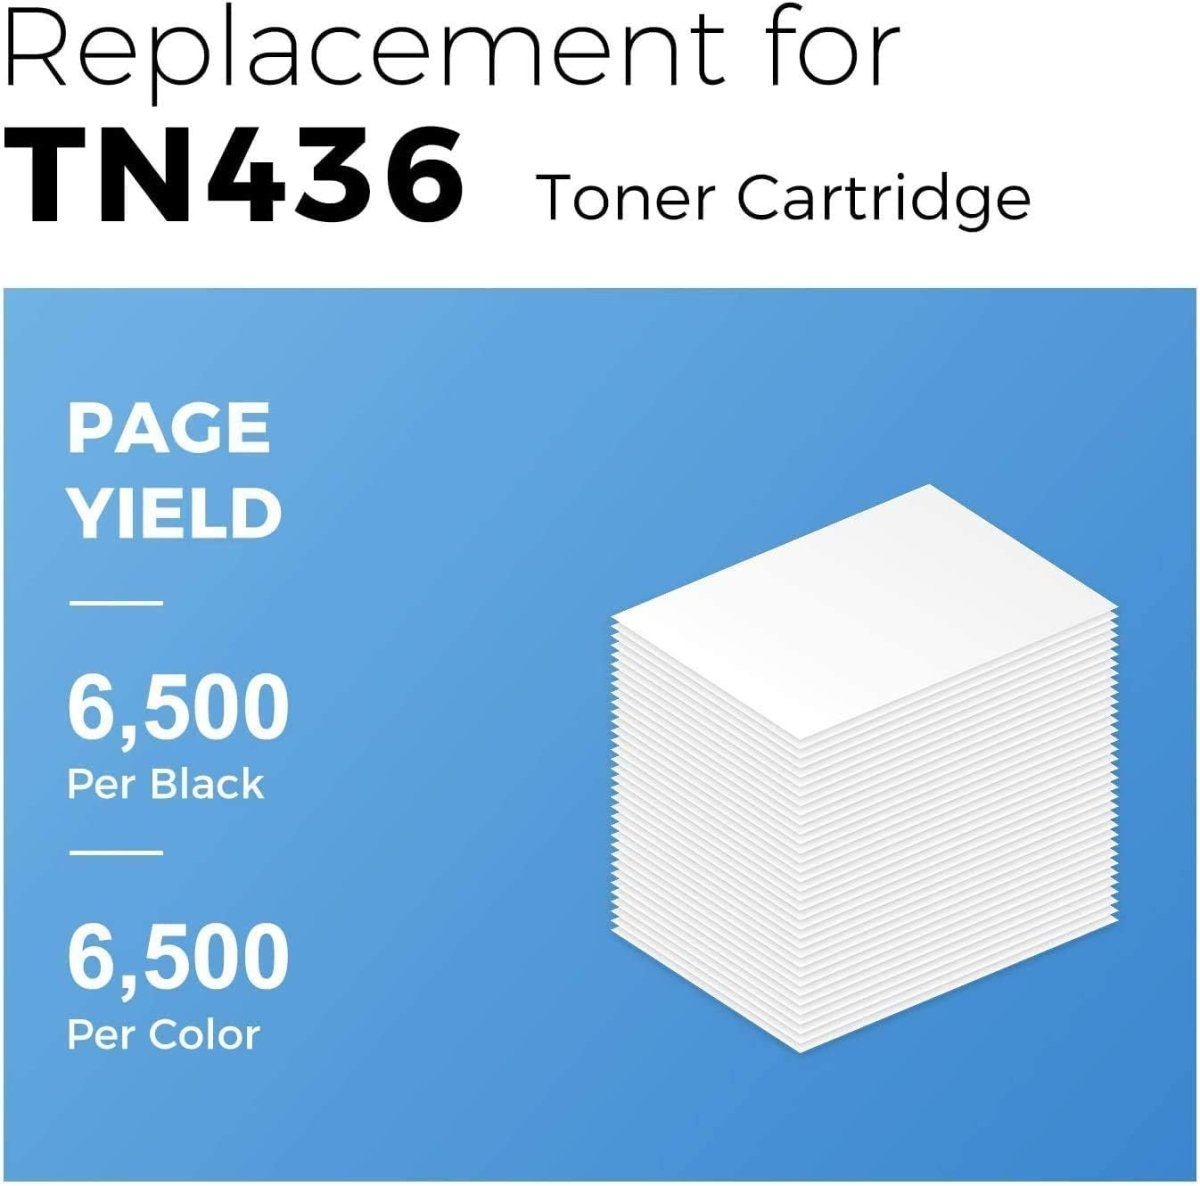 Compatible Brother TN436 Toner Cartridge (Black/Cyan/Magenta/Yellow, 4 Pack) - Linford Office:Printer Ink & Toner Cartridge